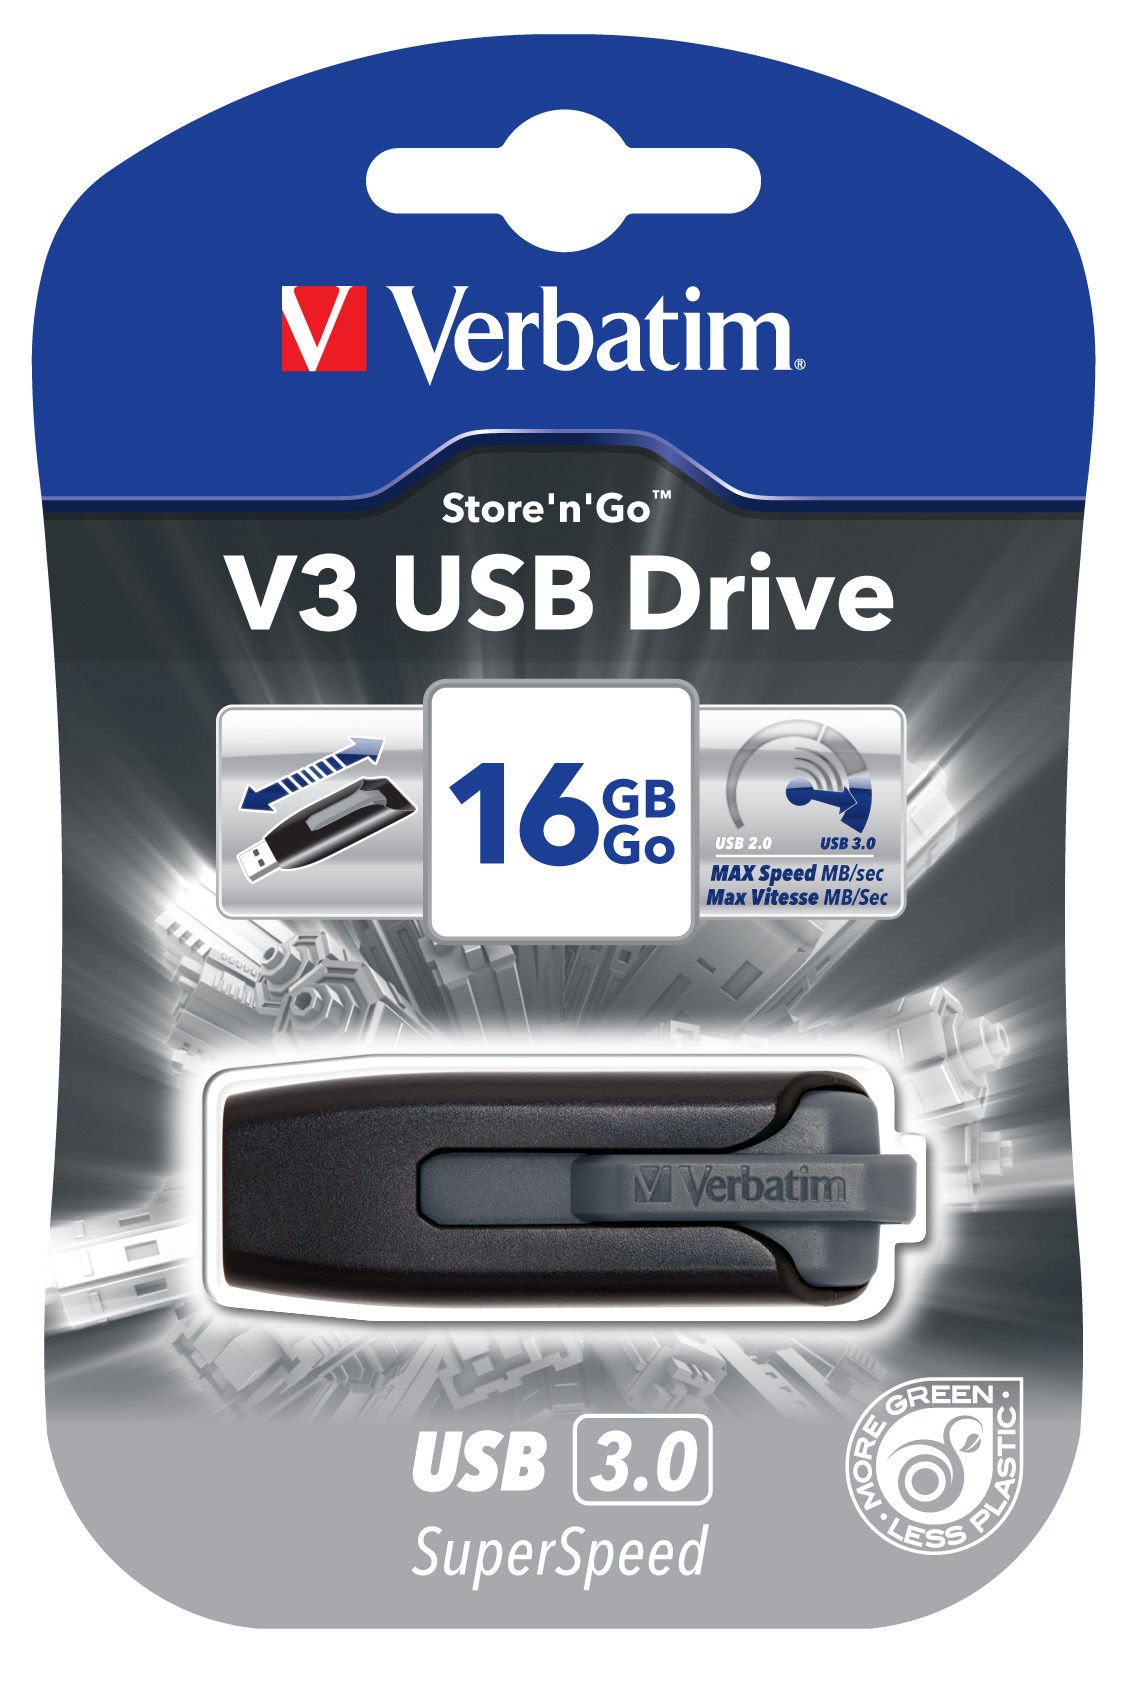 USB-Minne 3.0 Verbatim Store n Go V3 16GB 36110002_1